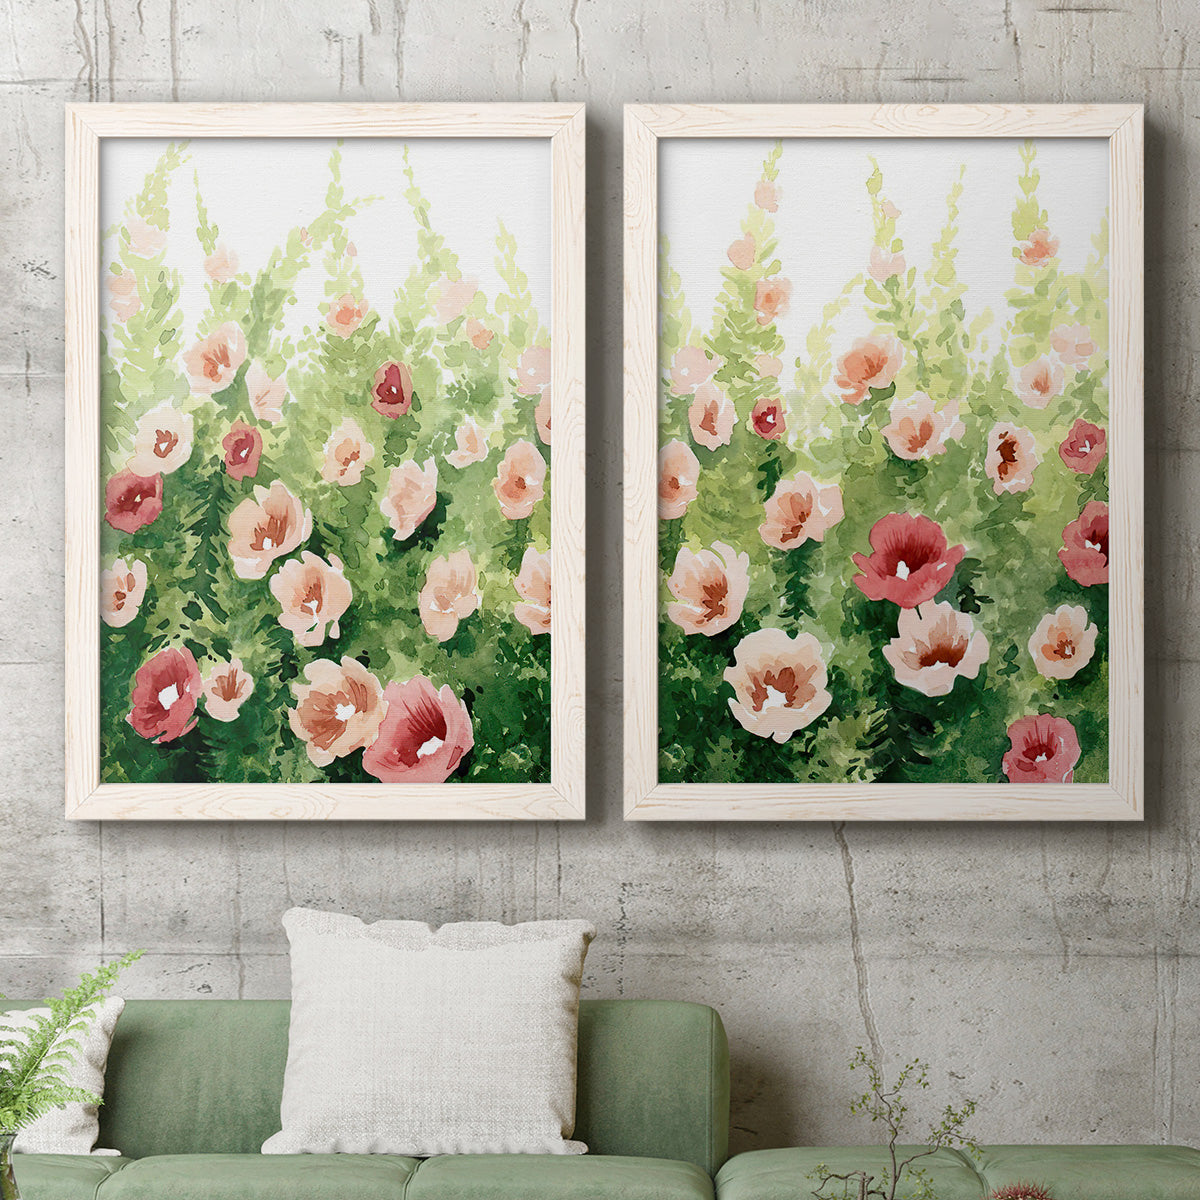 Sunlit Flora I - Premium Framed Canvas 2 Piece Set - Ready to Hang